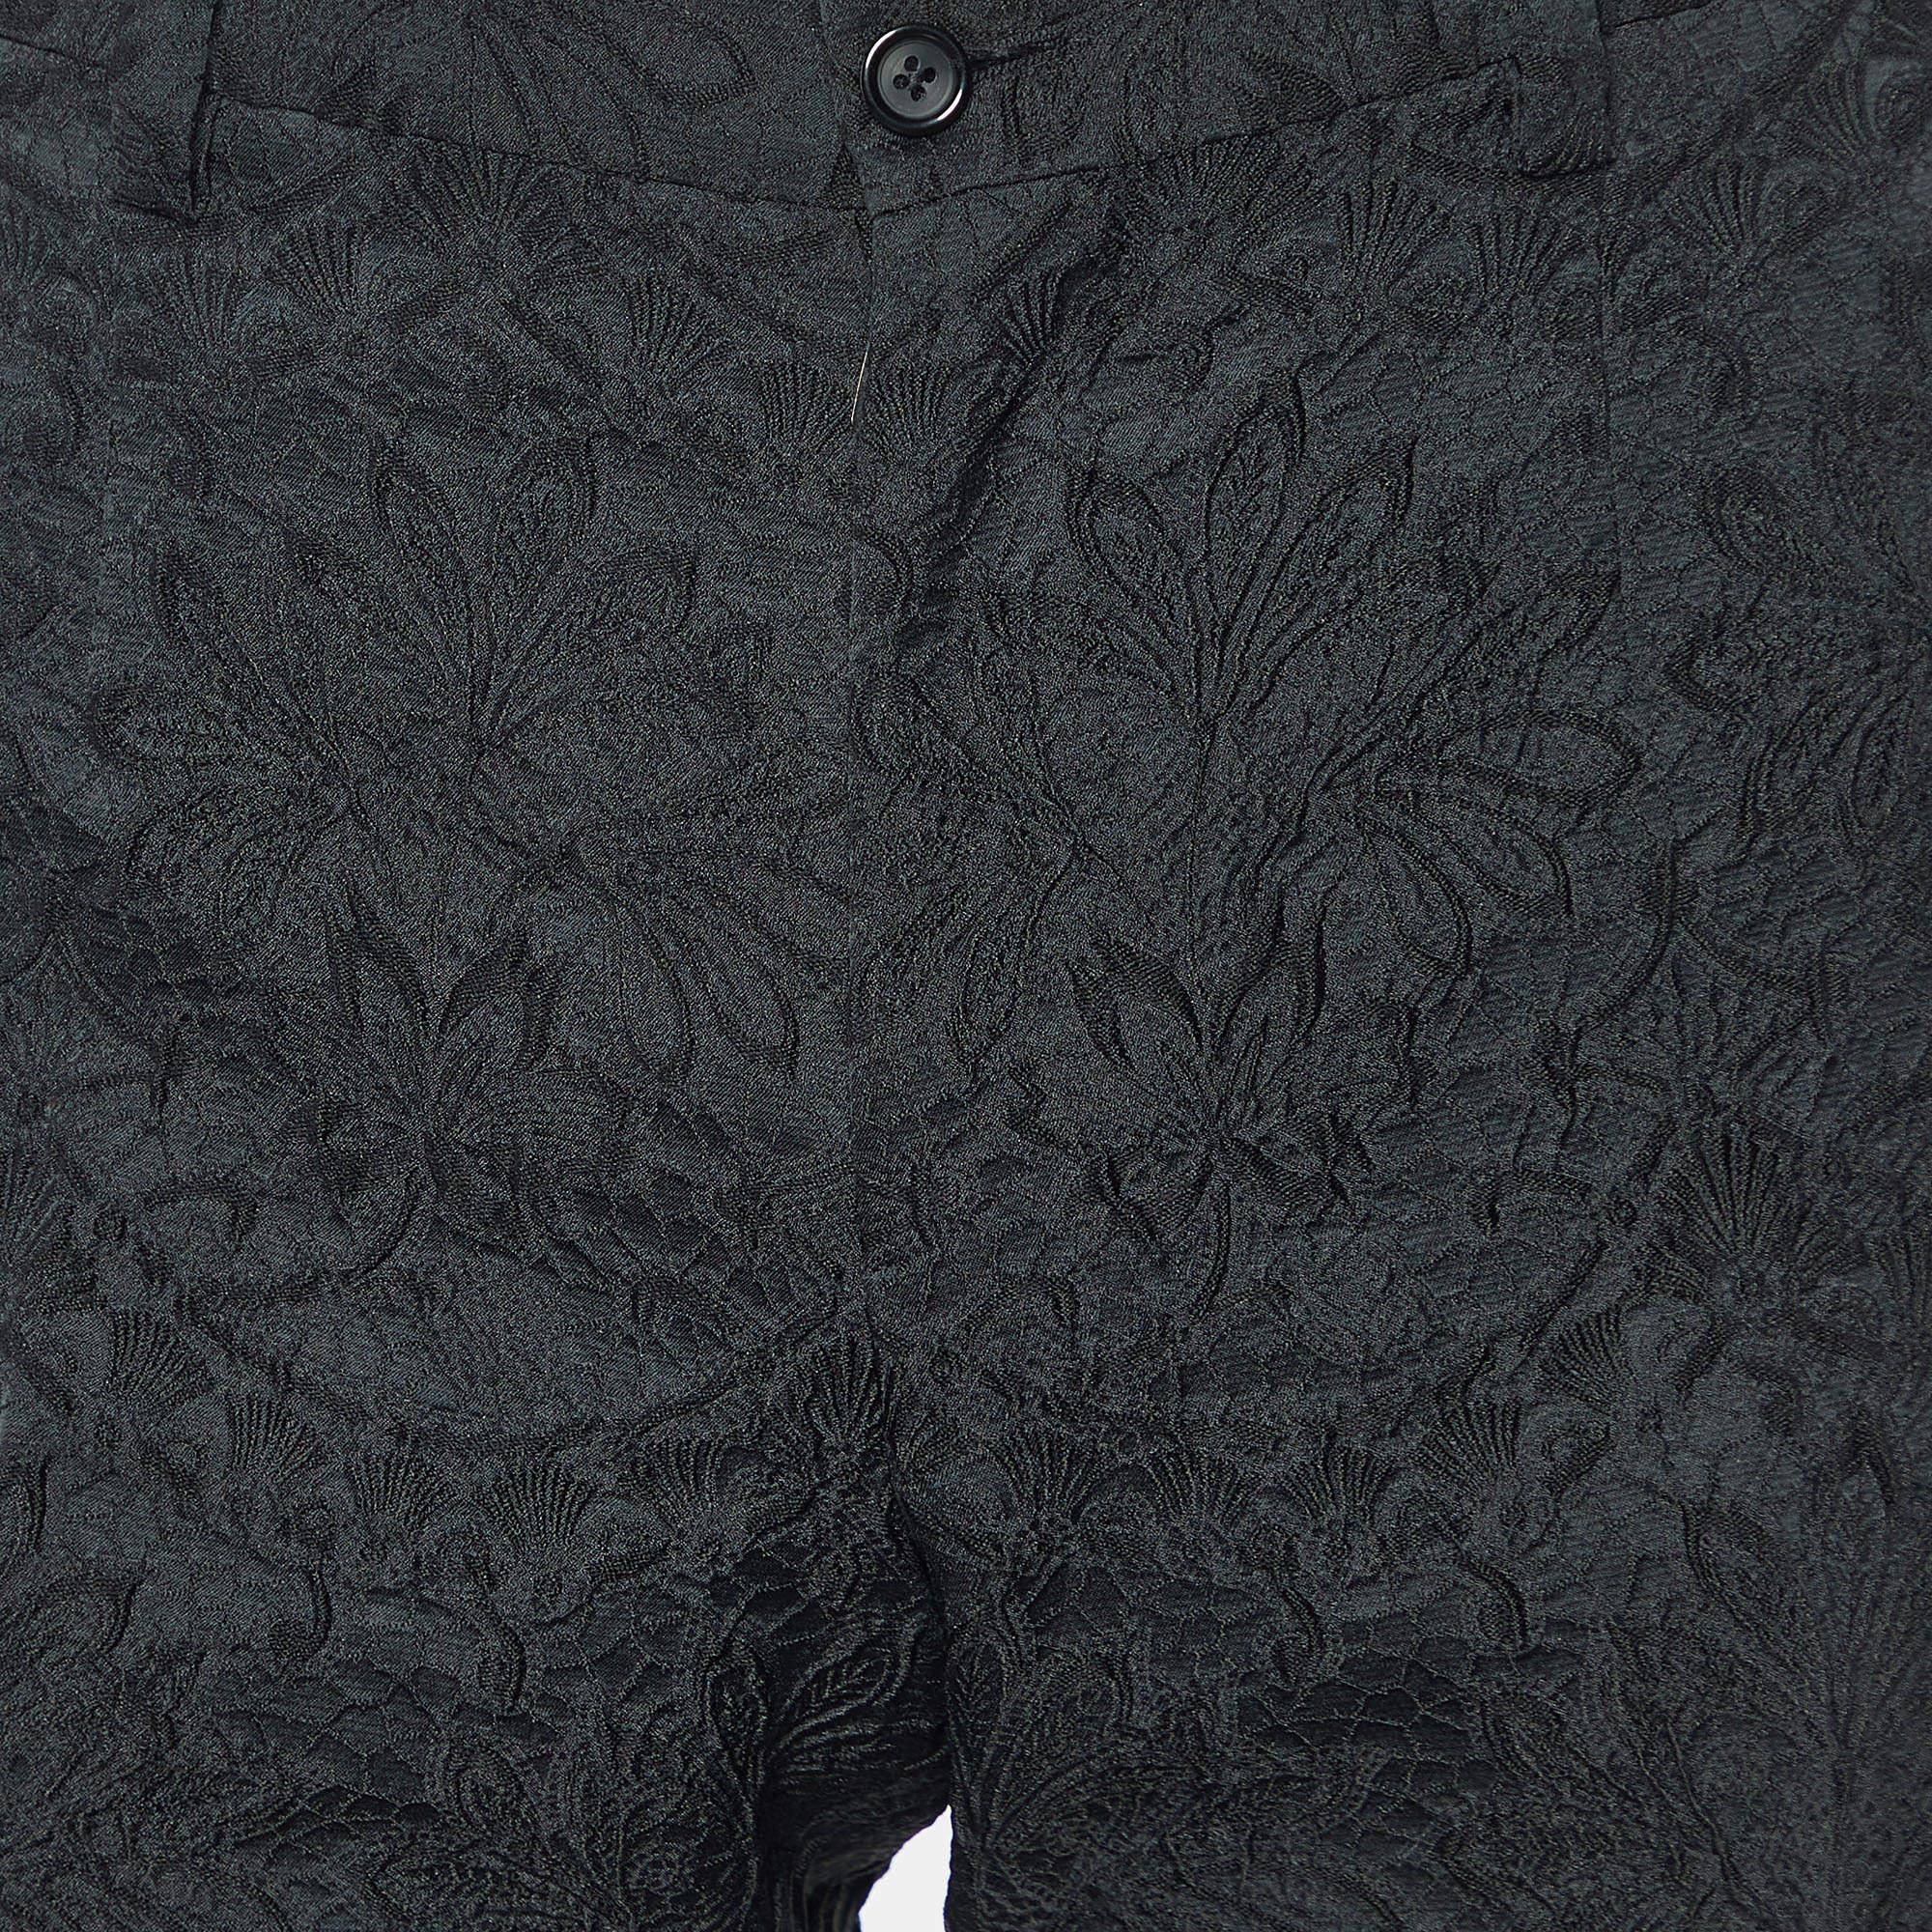 Dolce & Gabbana Black Floral Embossed Jacquard Tailored Pants M In Excellent Condition For Sale In Dubai, Al Qouz 2